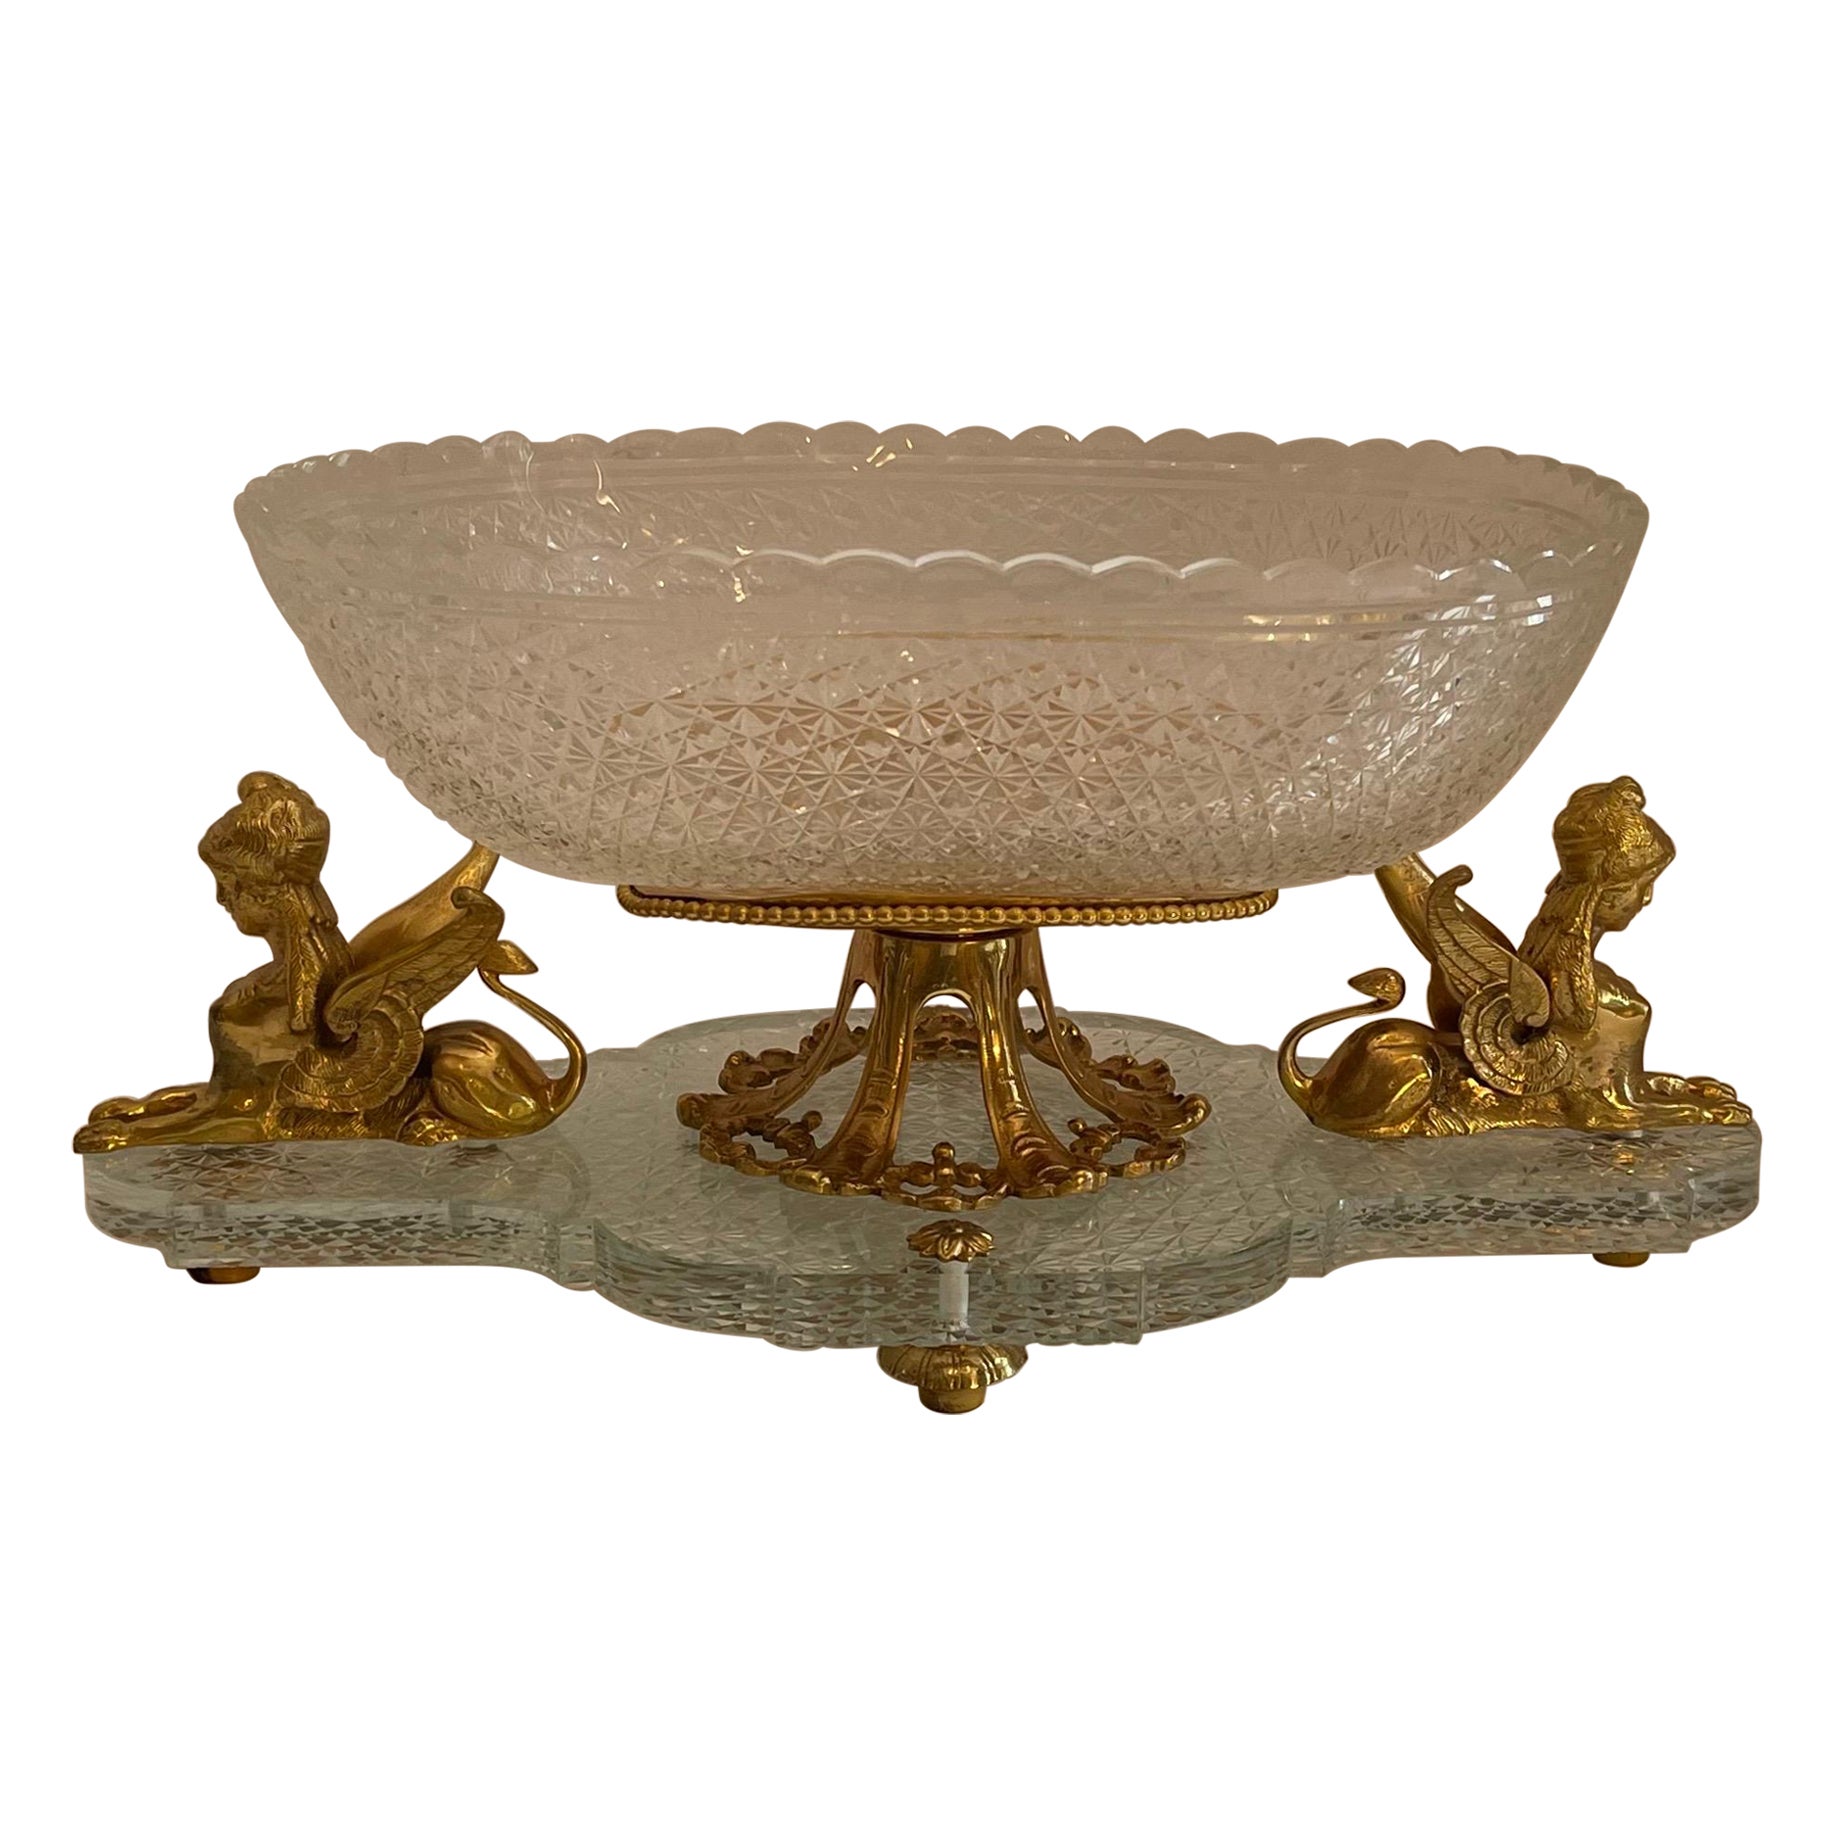 Wonderful French Empire Ormolu Bronze Sphinx Oval Cut Crystal Centerpiece Bowl